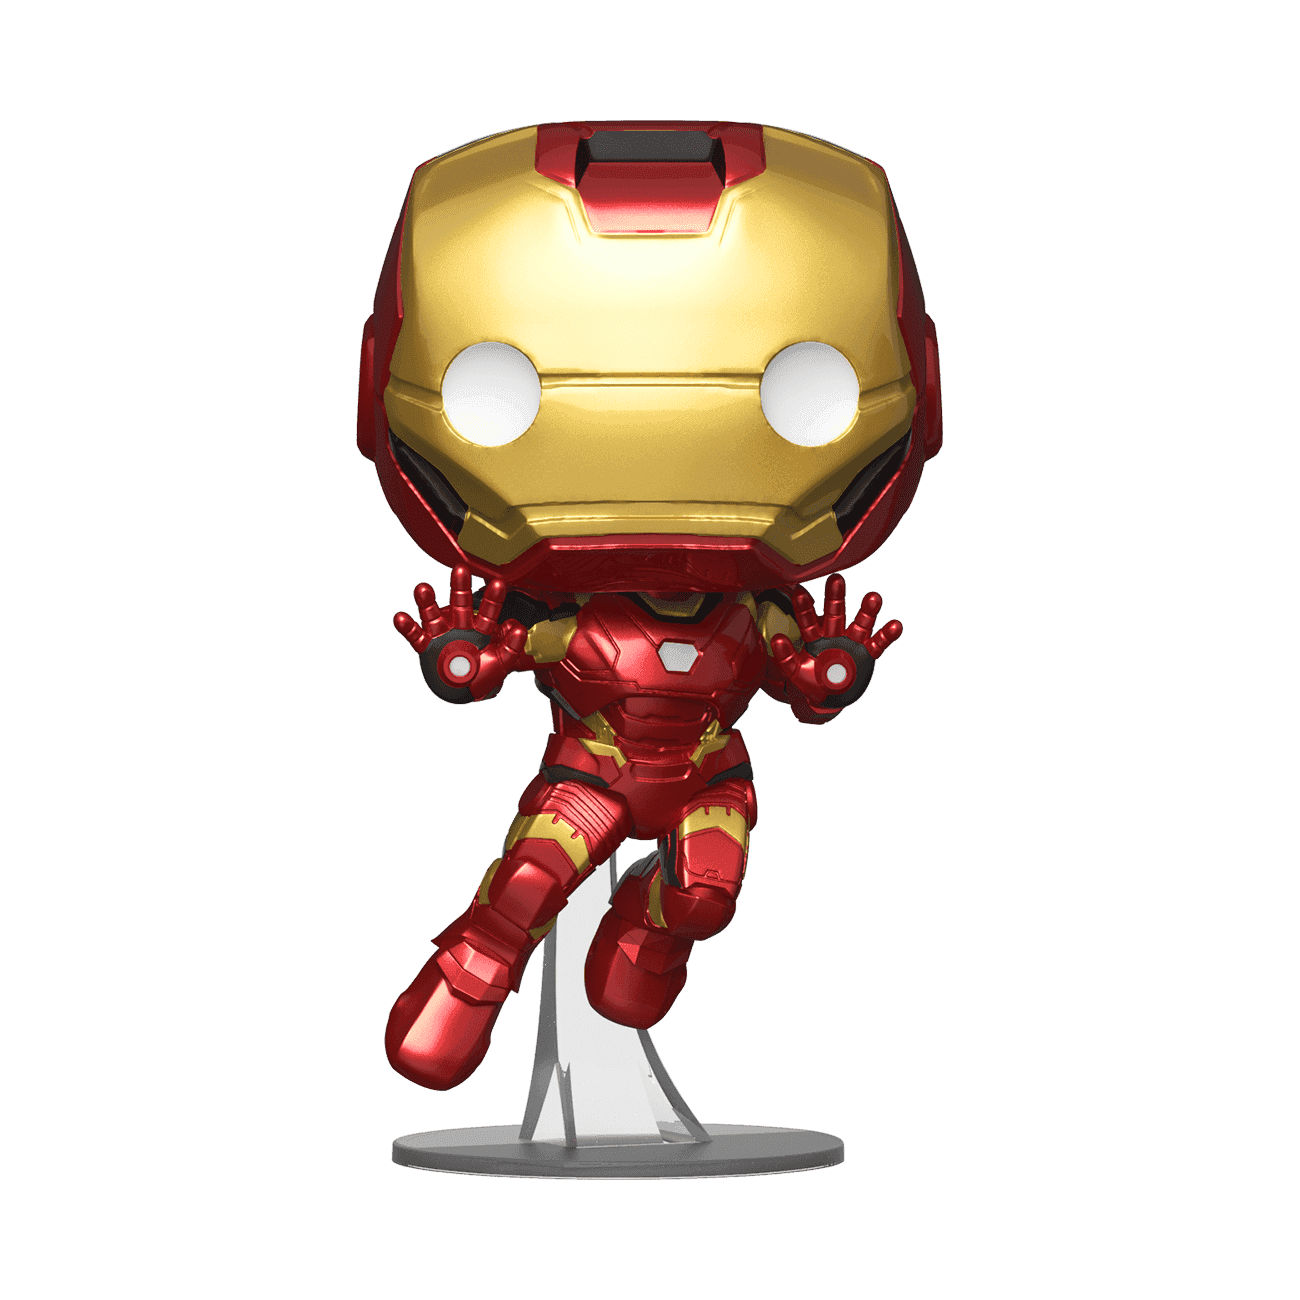 image de Iron Man (Metallic)